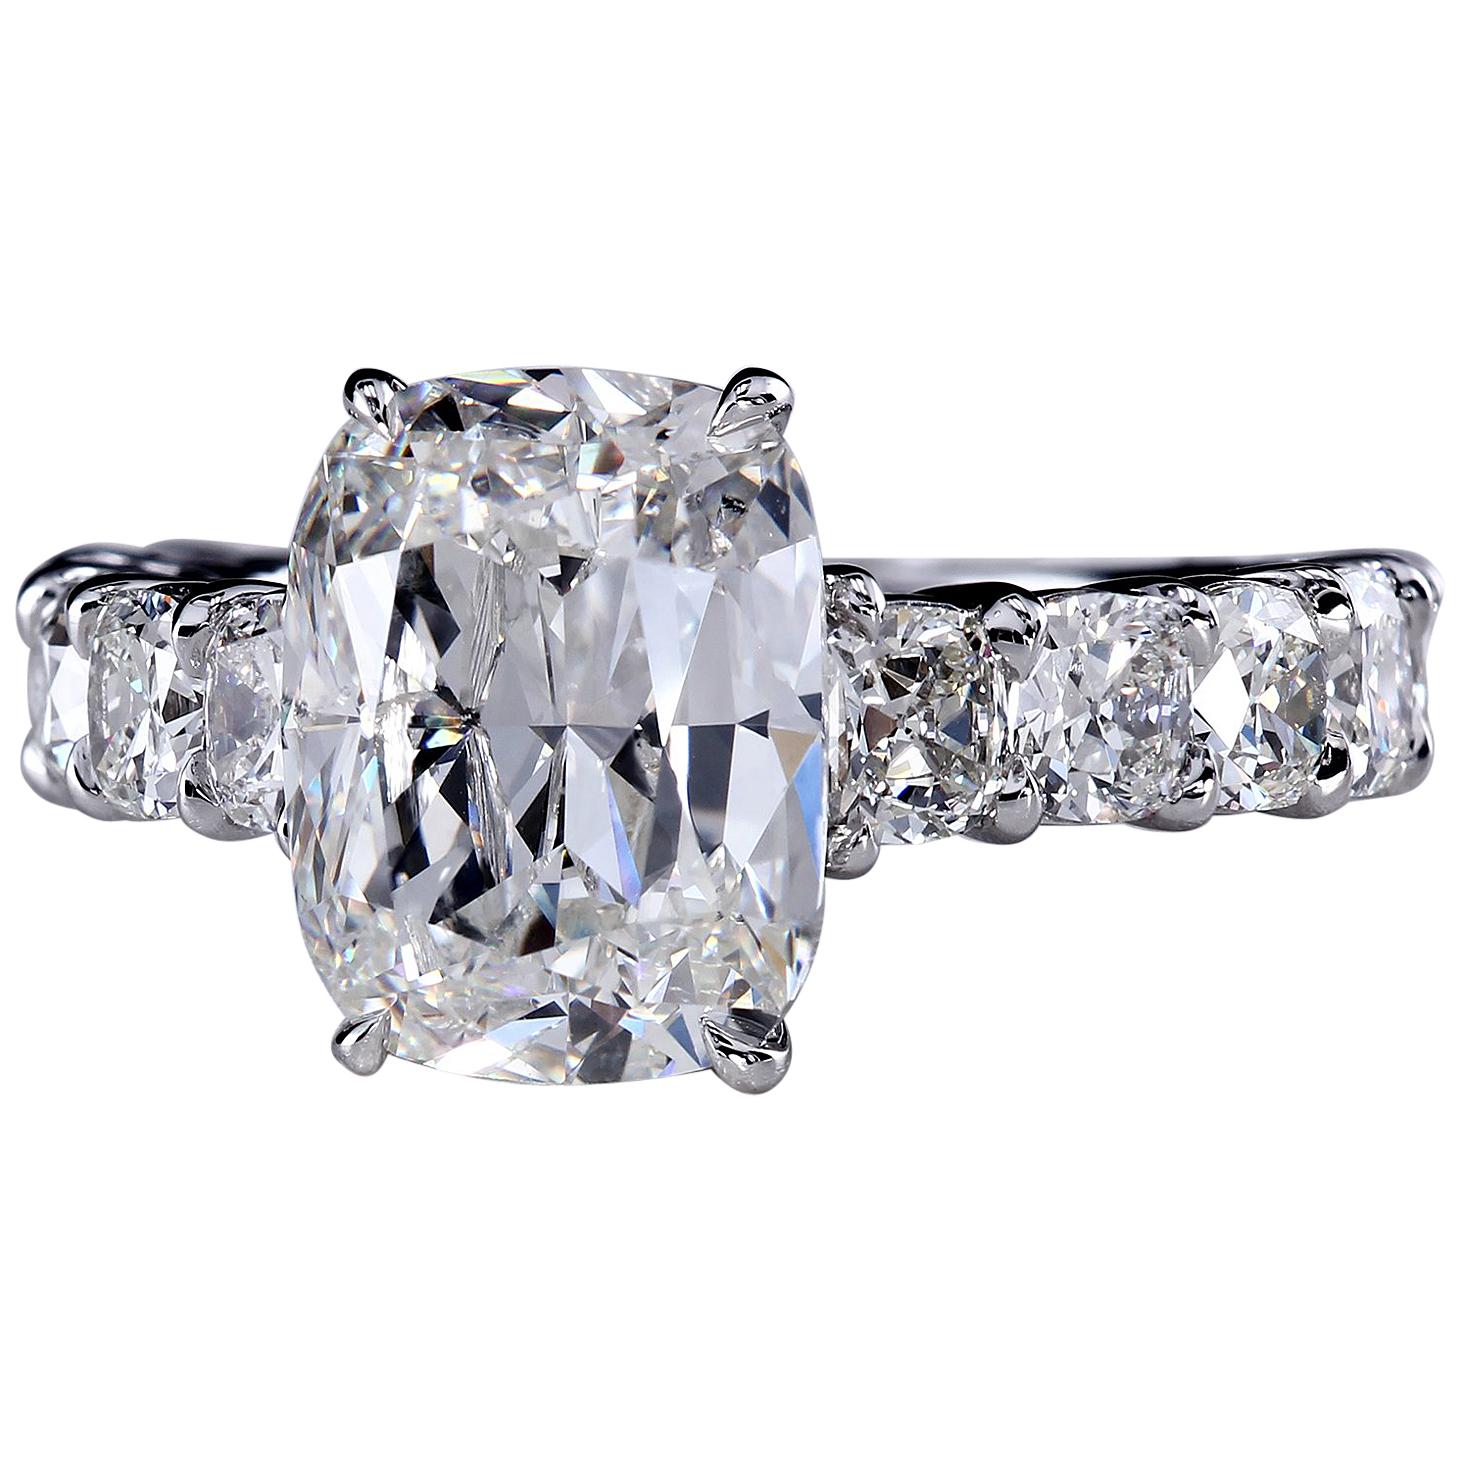 Leon Mege GIA Certified 5.19-Carat Antique Cushion Diamond Engagement Ring